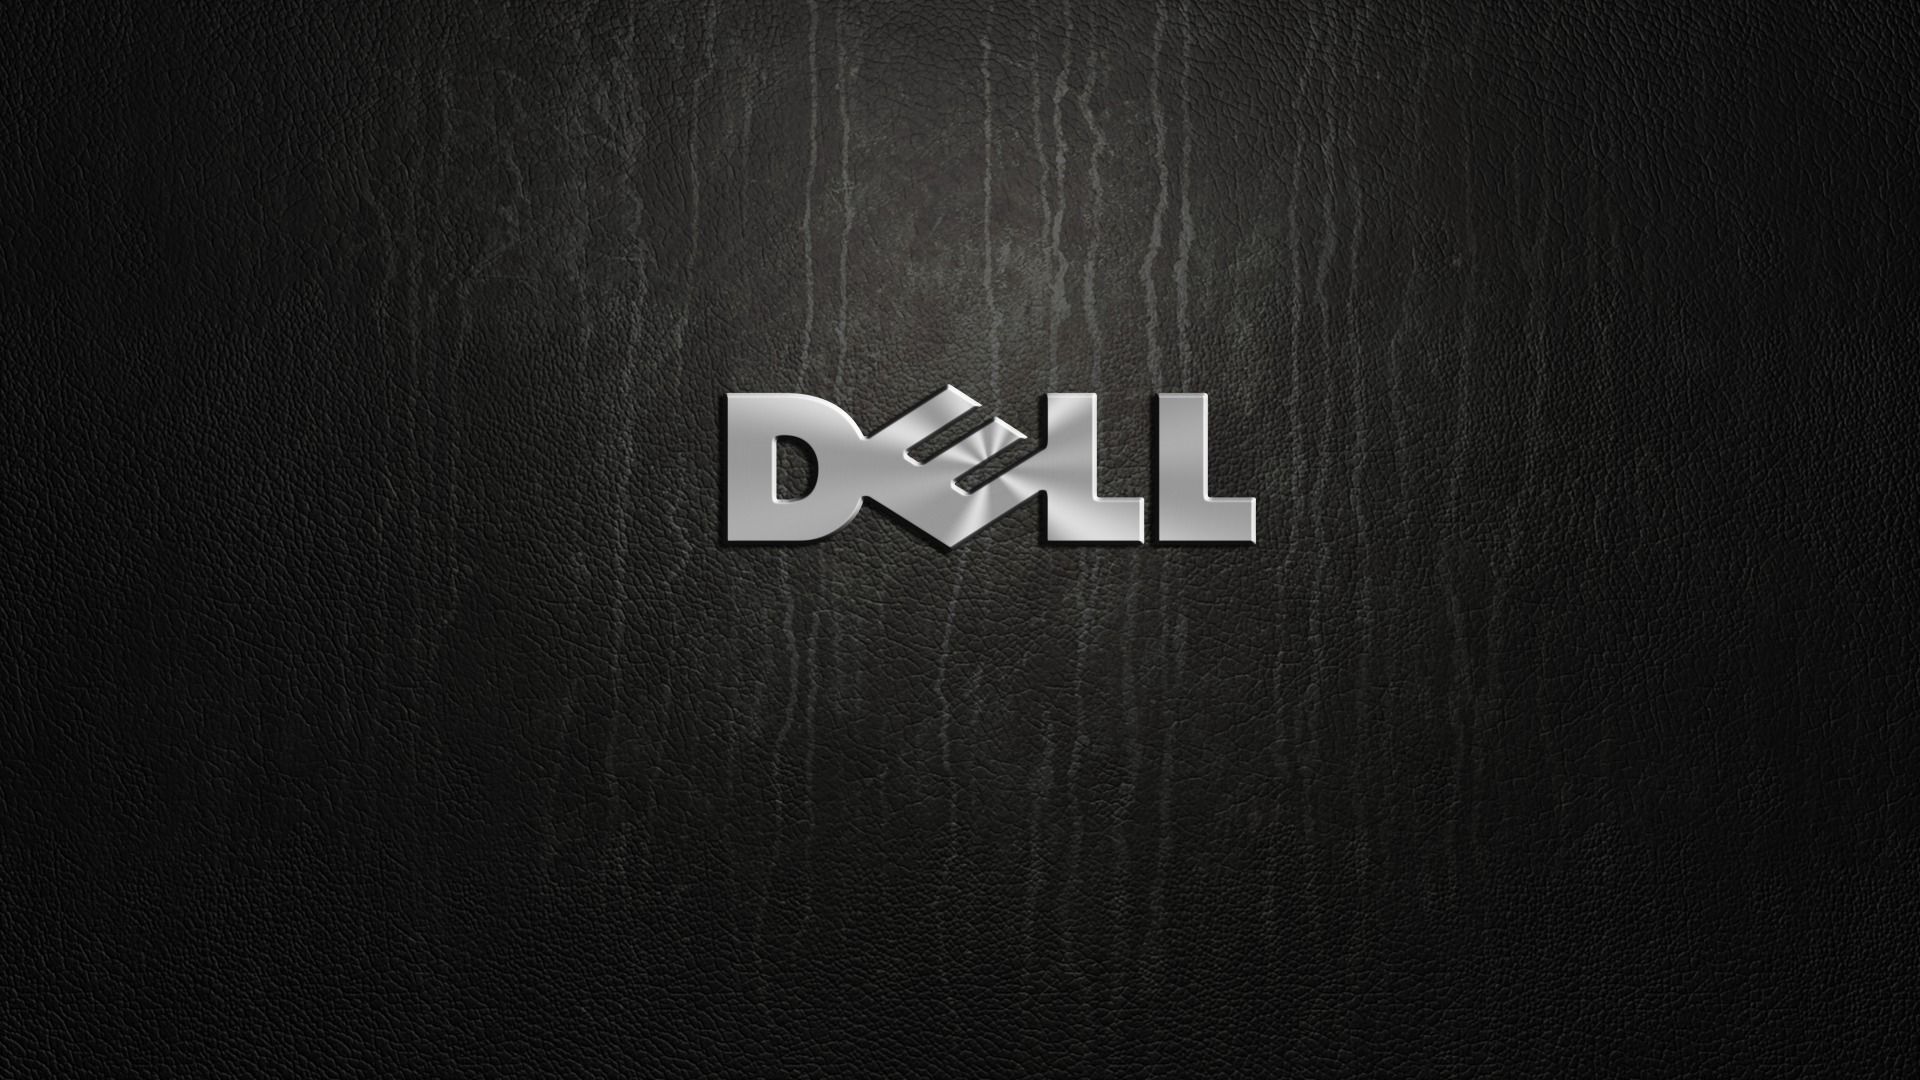 Dell 1080p wallpaper